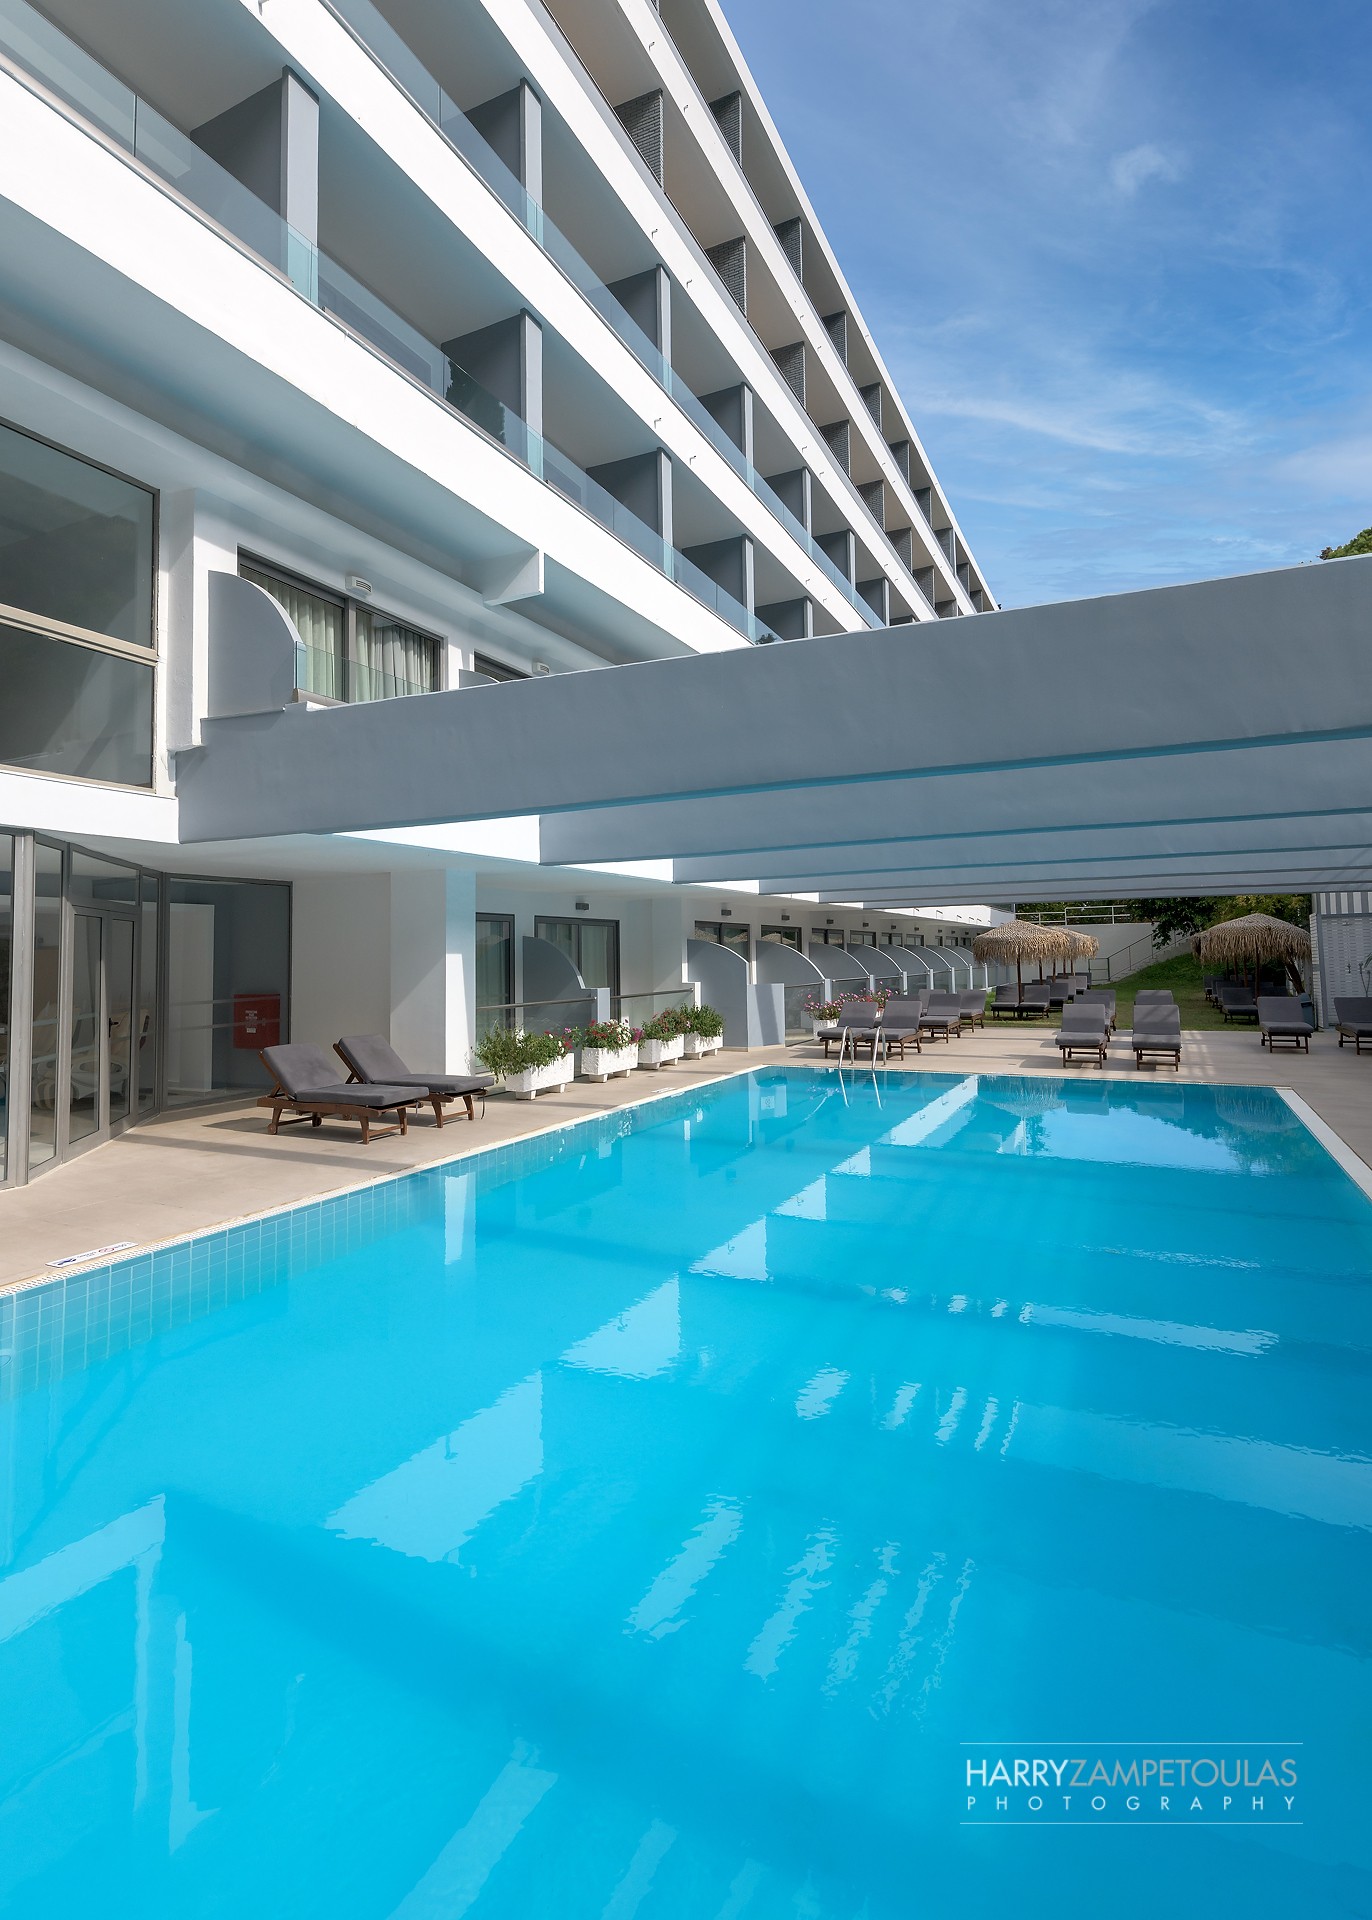 Oceanis-Hotel-Rhodes-Harry-Zampetoulas-Photography-26 Oceanis Hotel Rhodes - Hotel Photography 